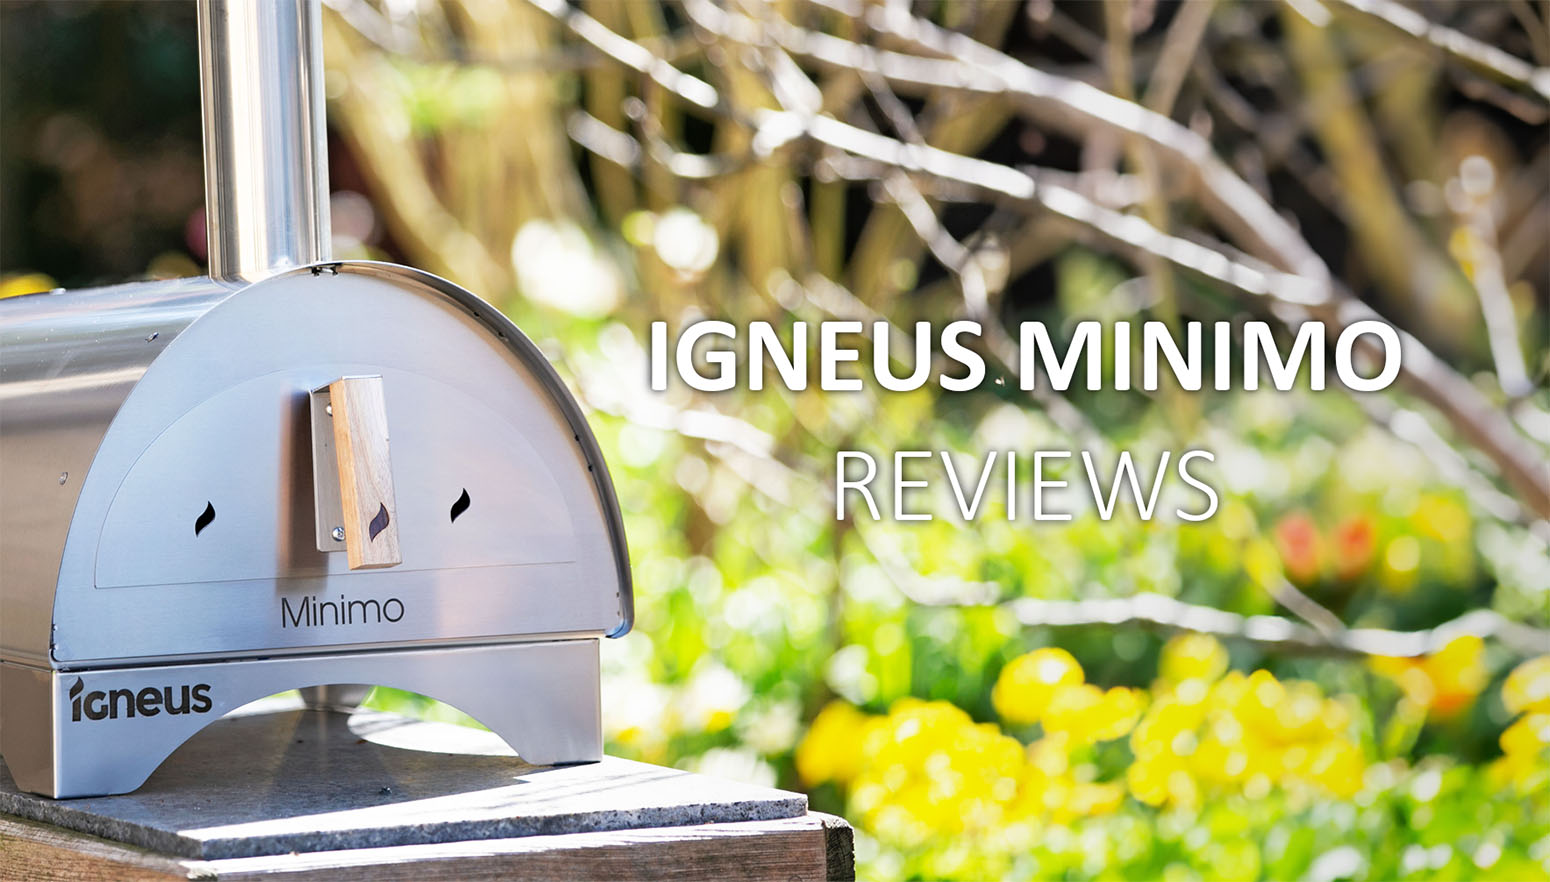 Igneus Minimo Reviews - igneus wood fired pizza ovens uk